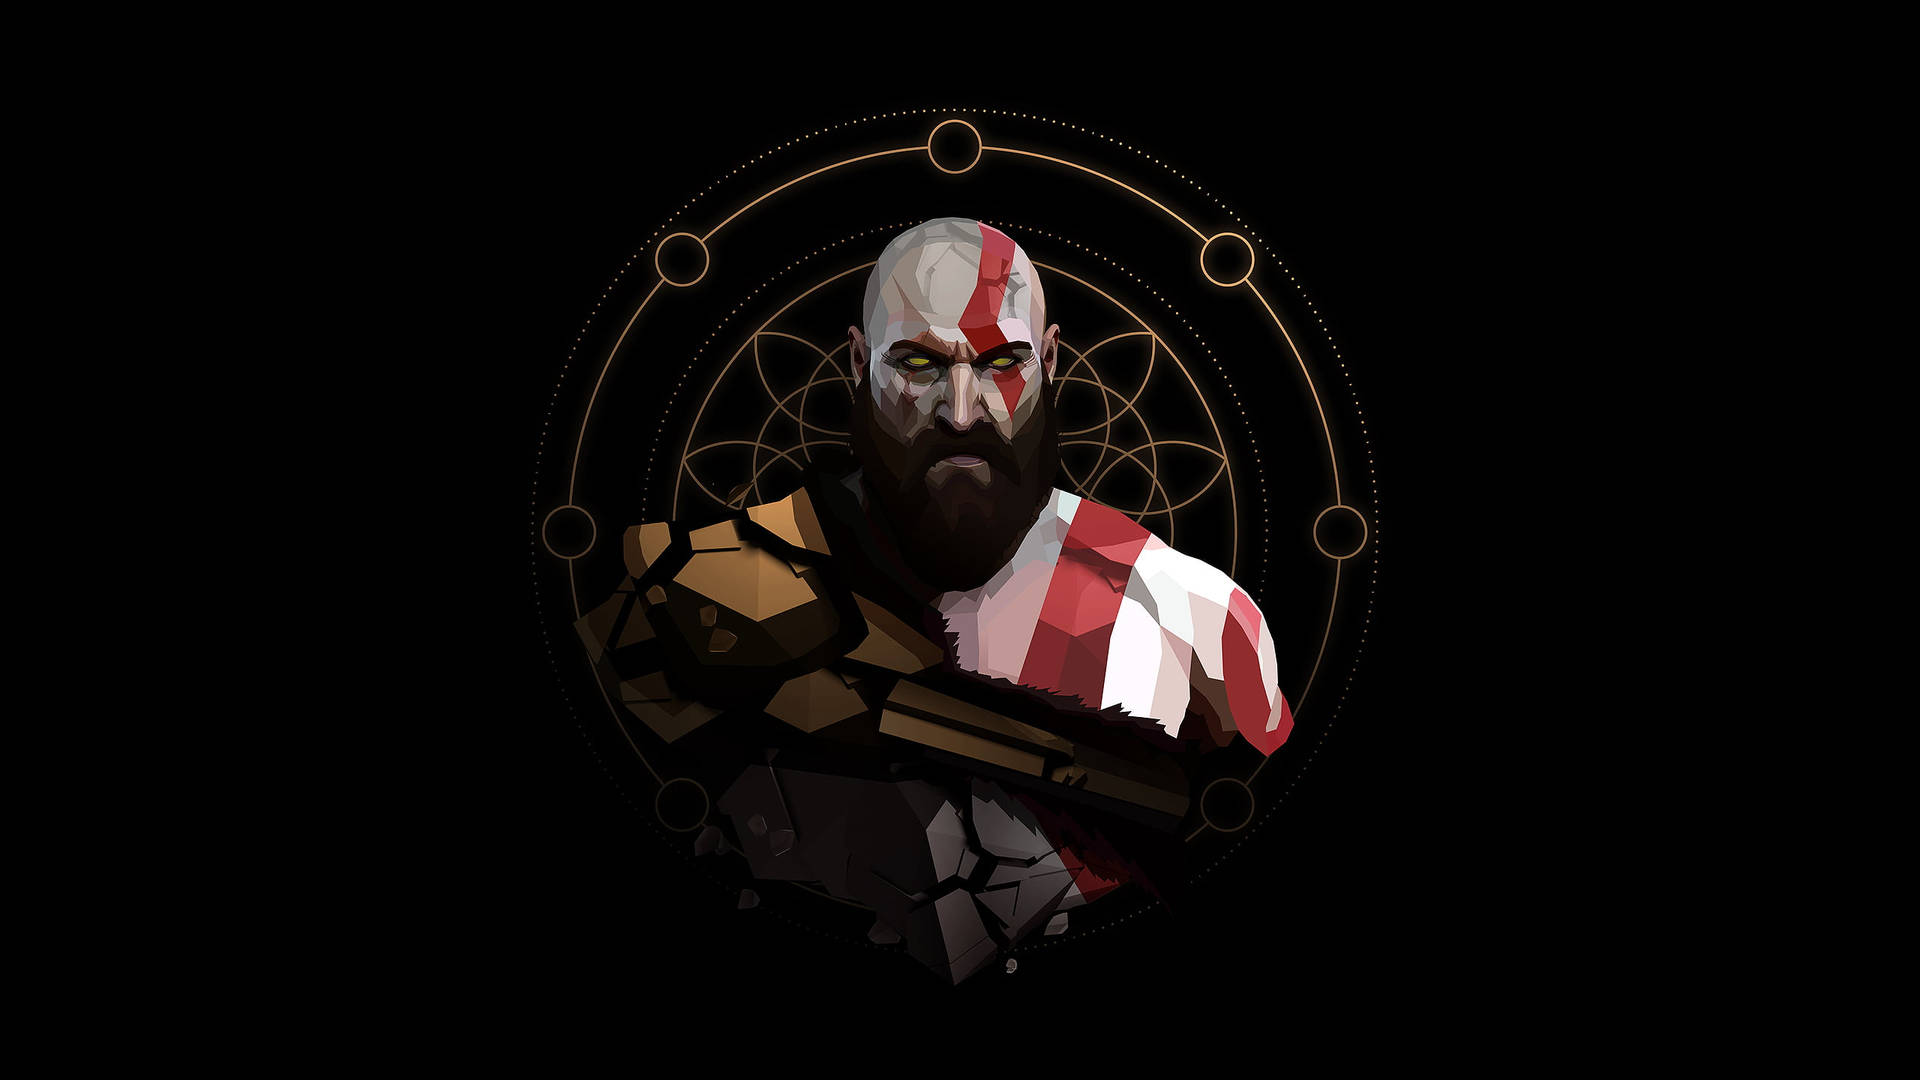 Cool Kratos Digital Fanart Background